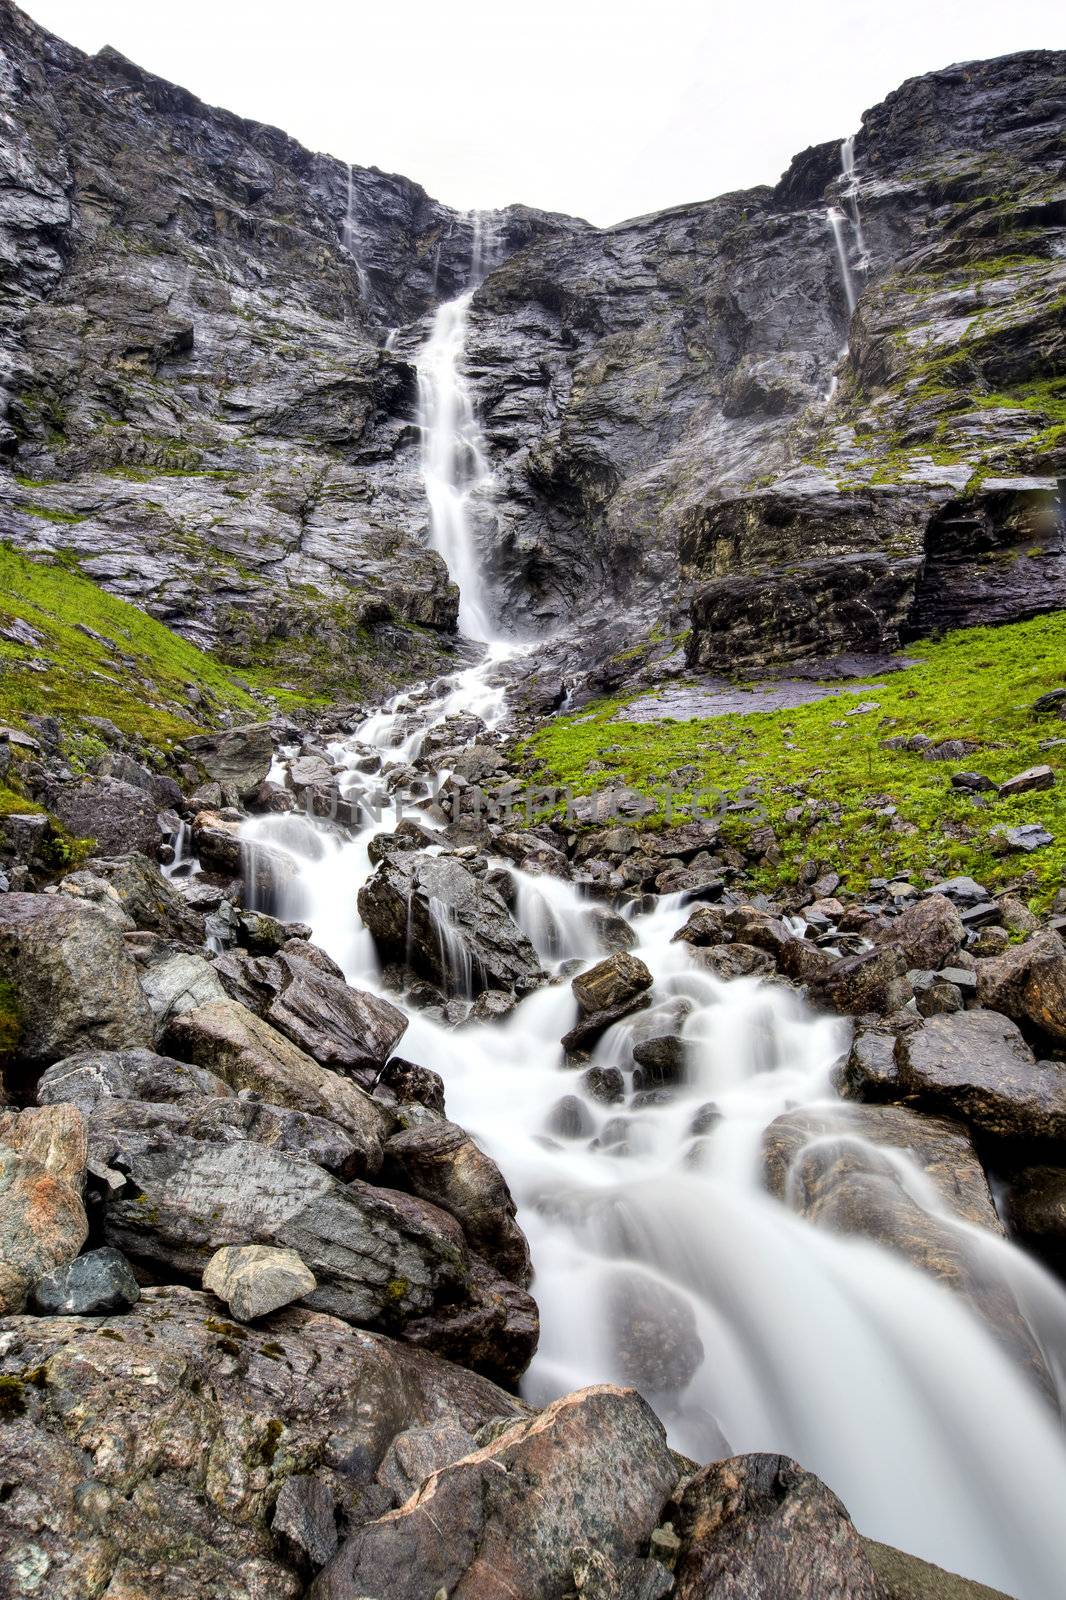 View of the beautiful Trollfossen waterfall in Norway